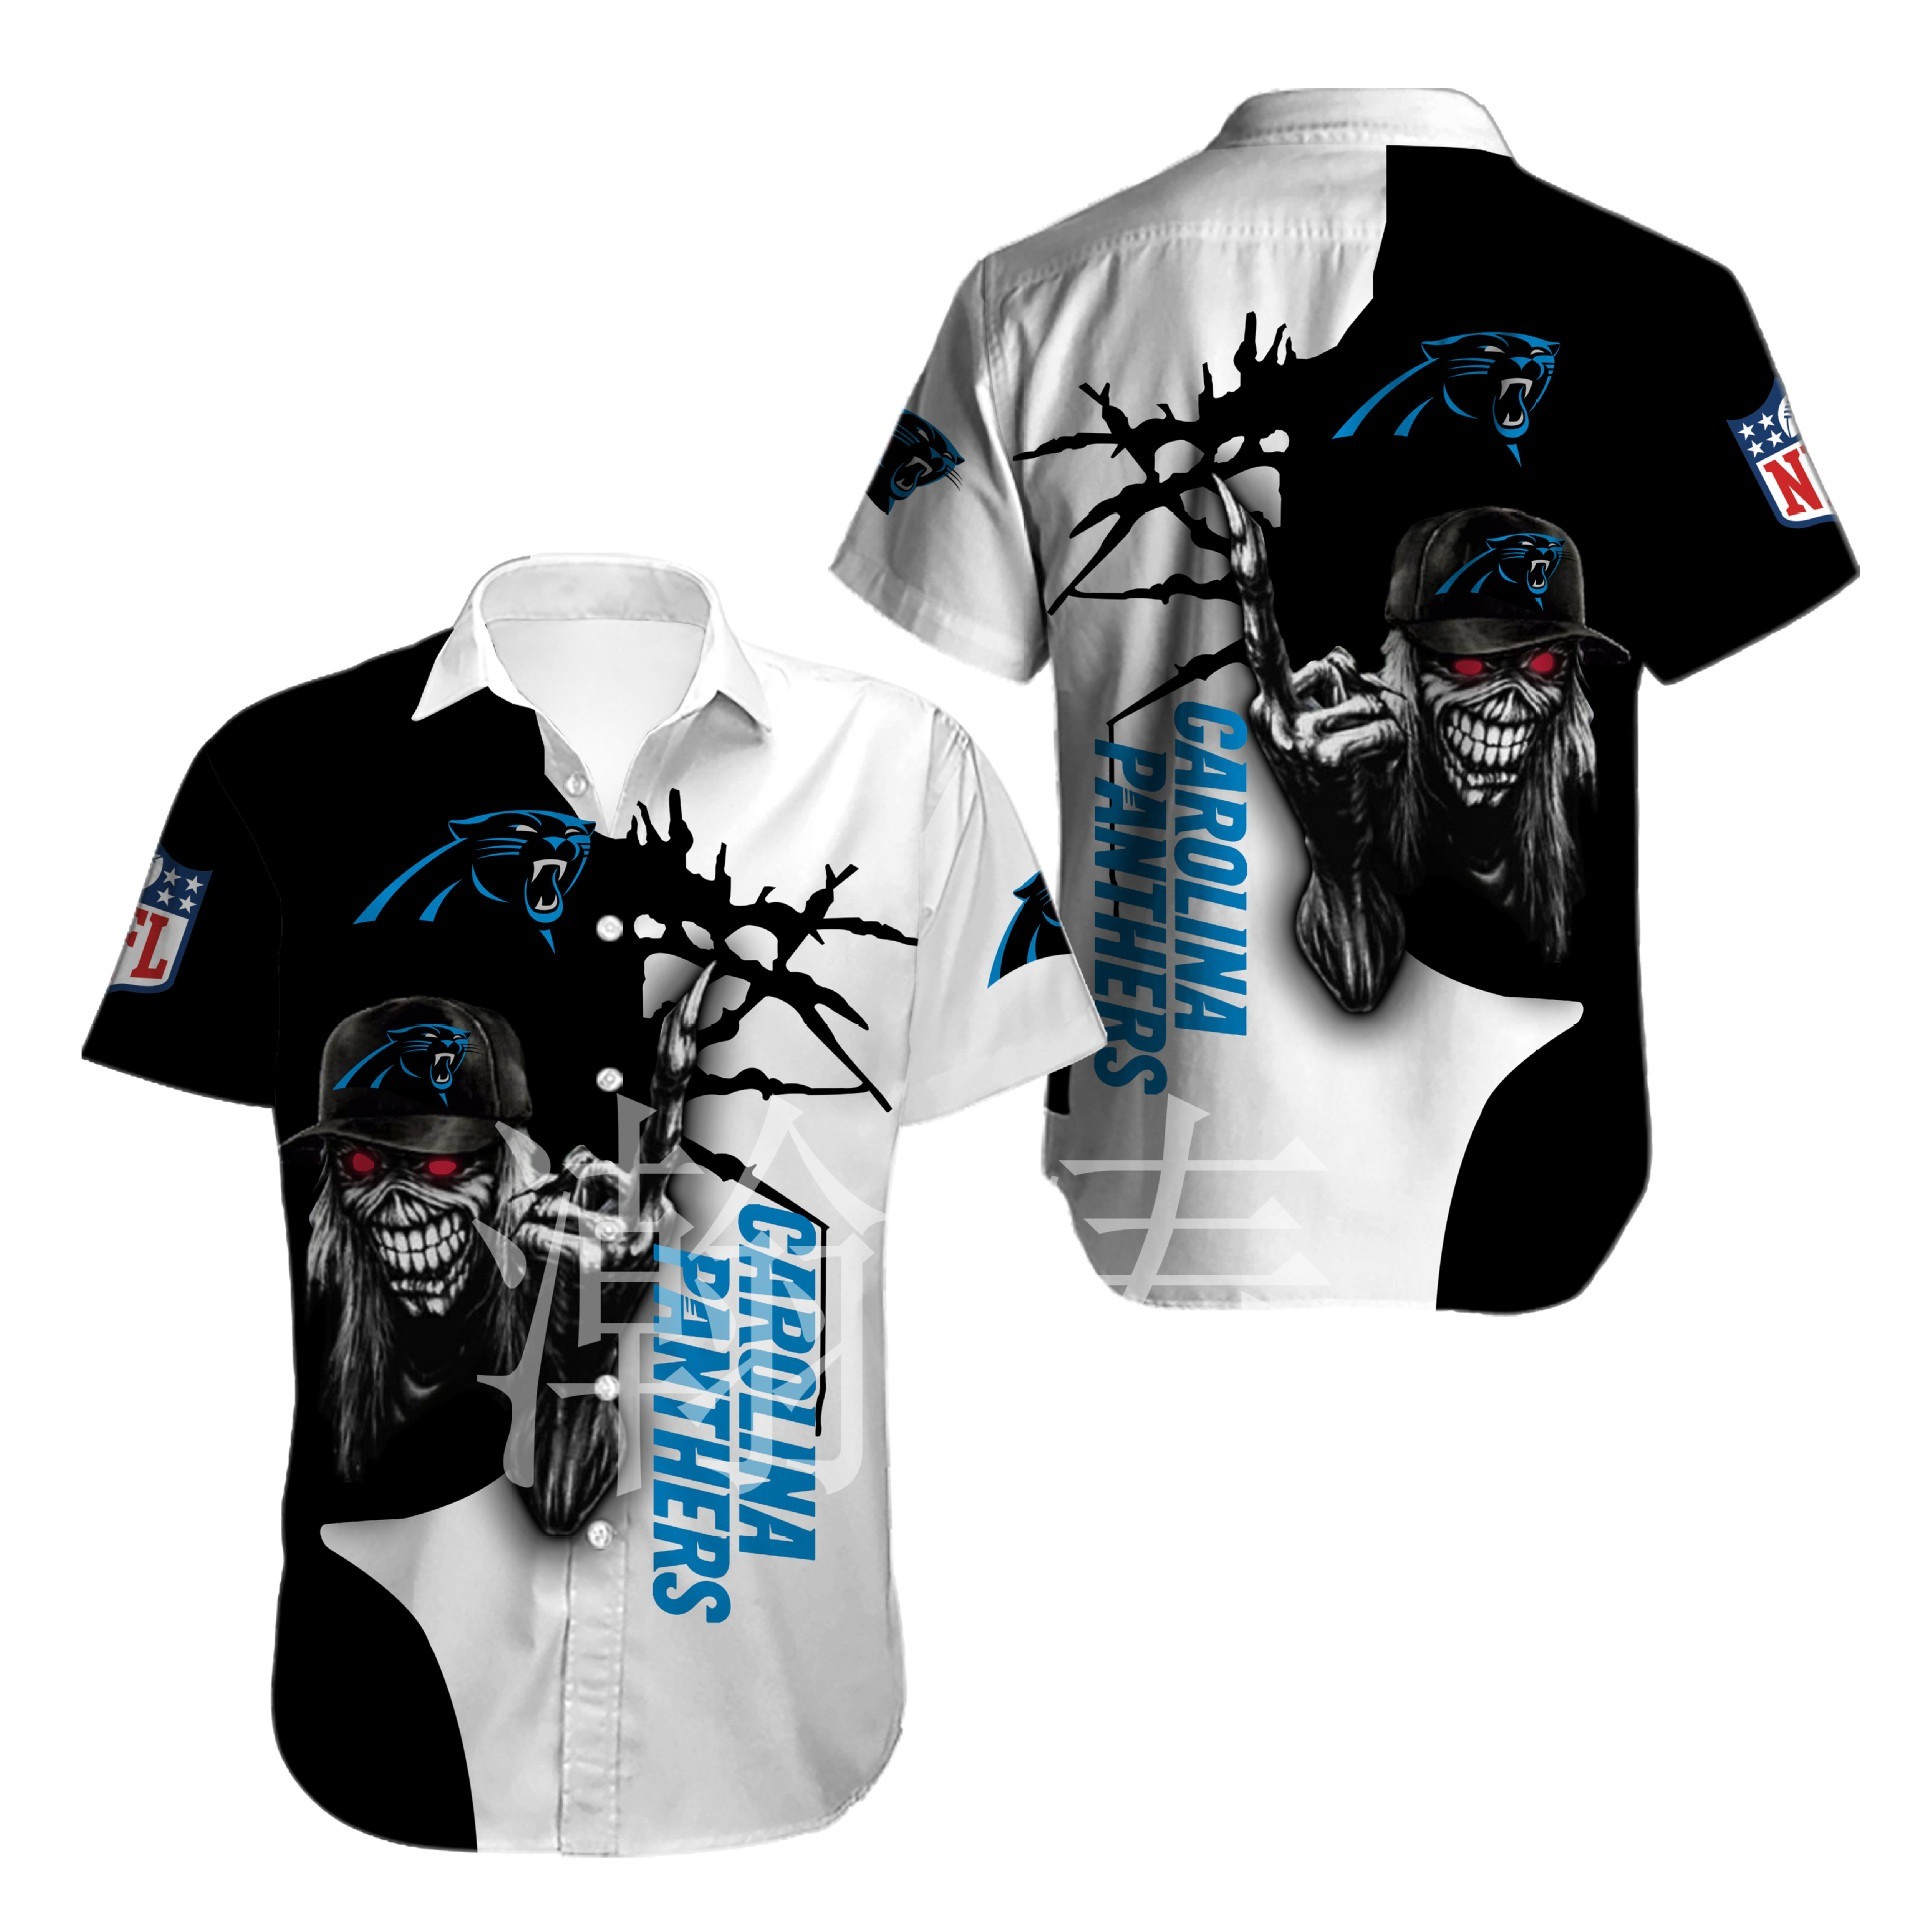 Carolina Panthers button-up shirt Iron Maiden gift for Halloween